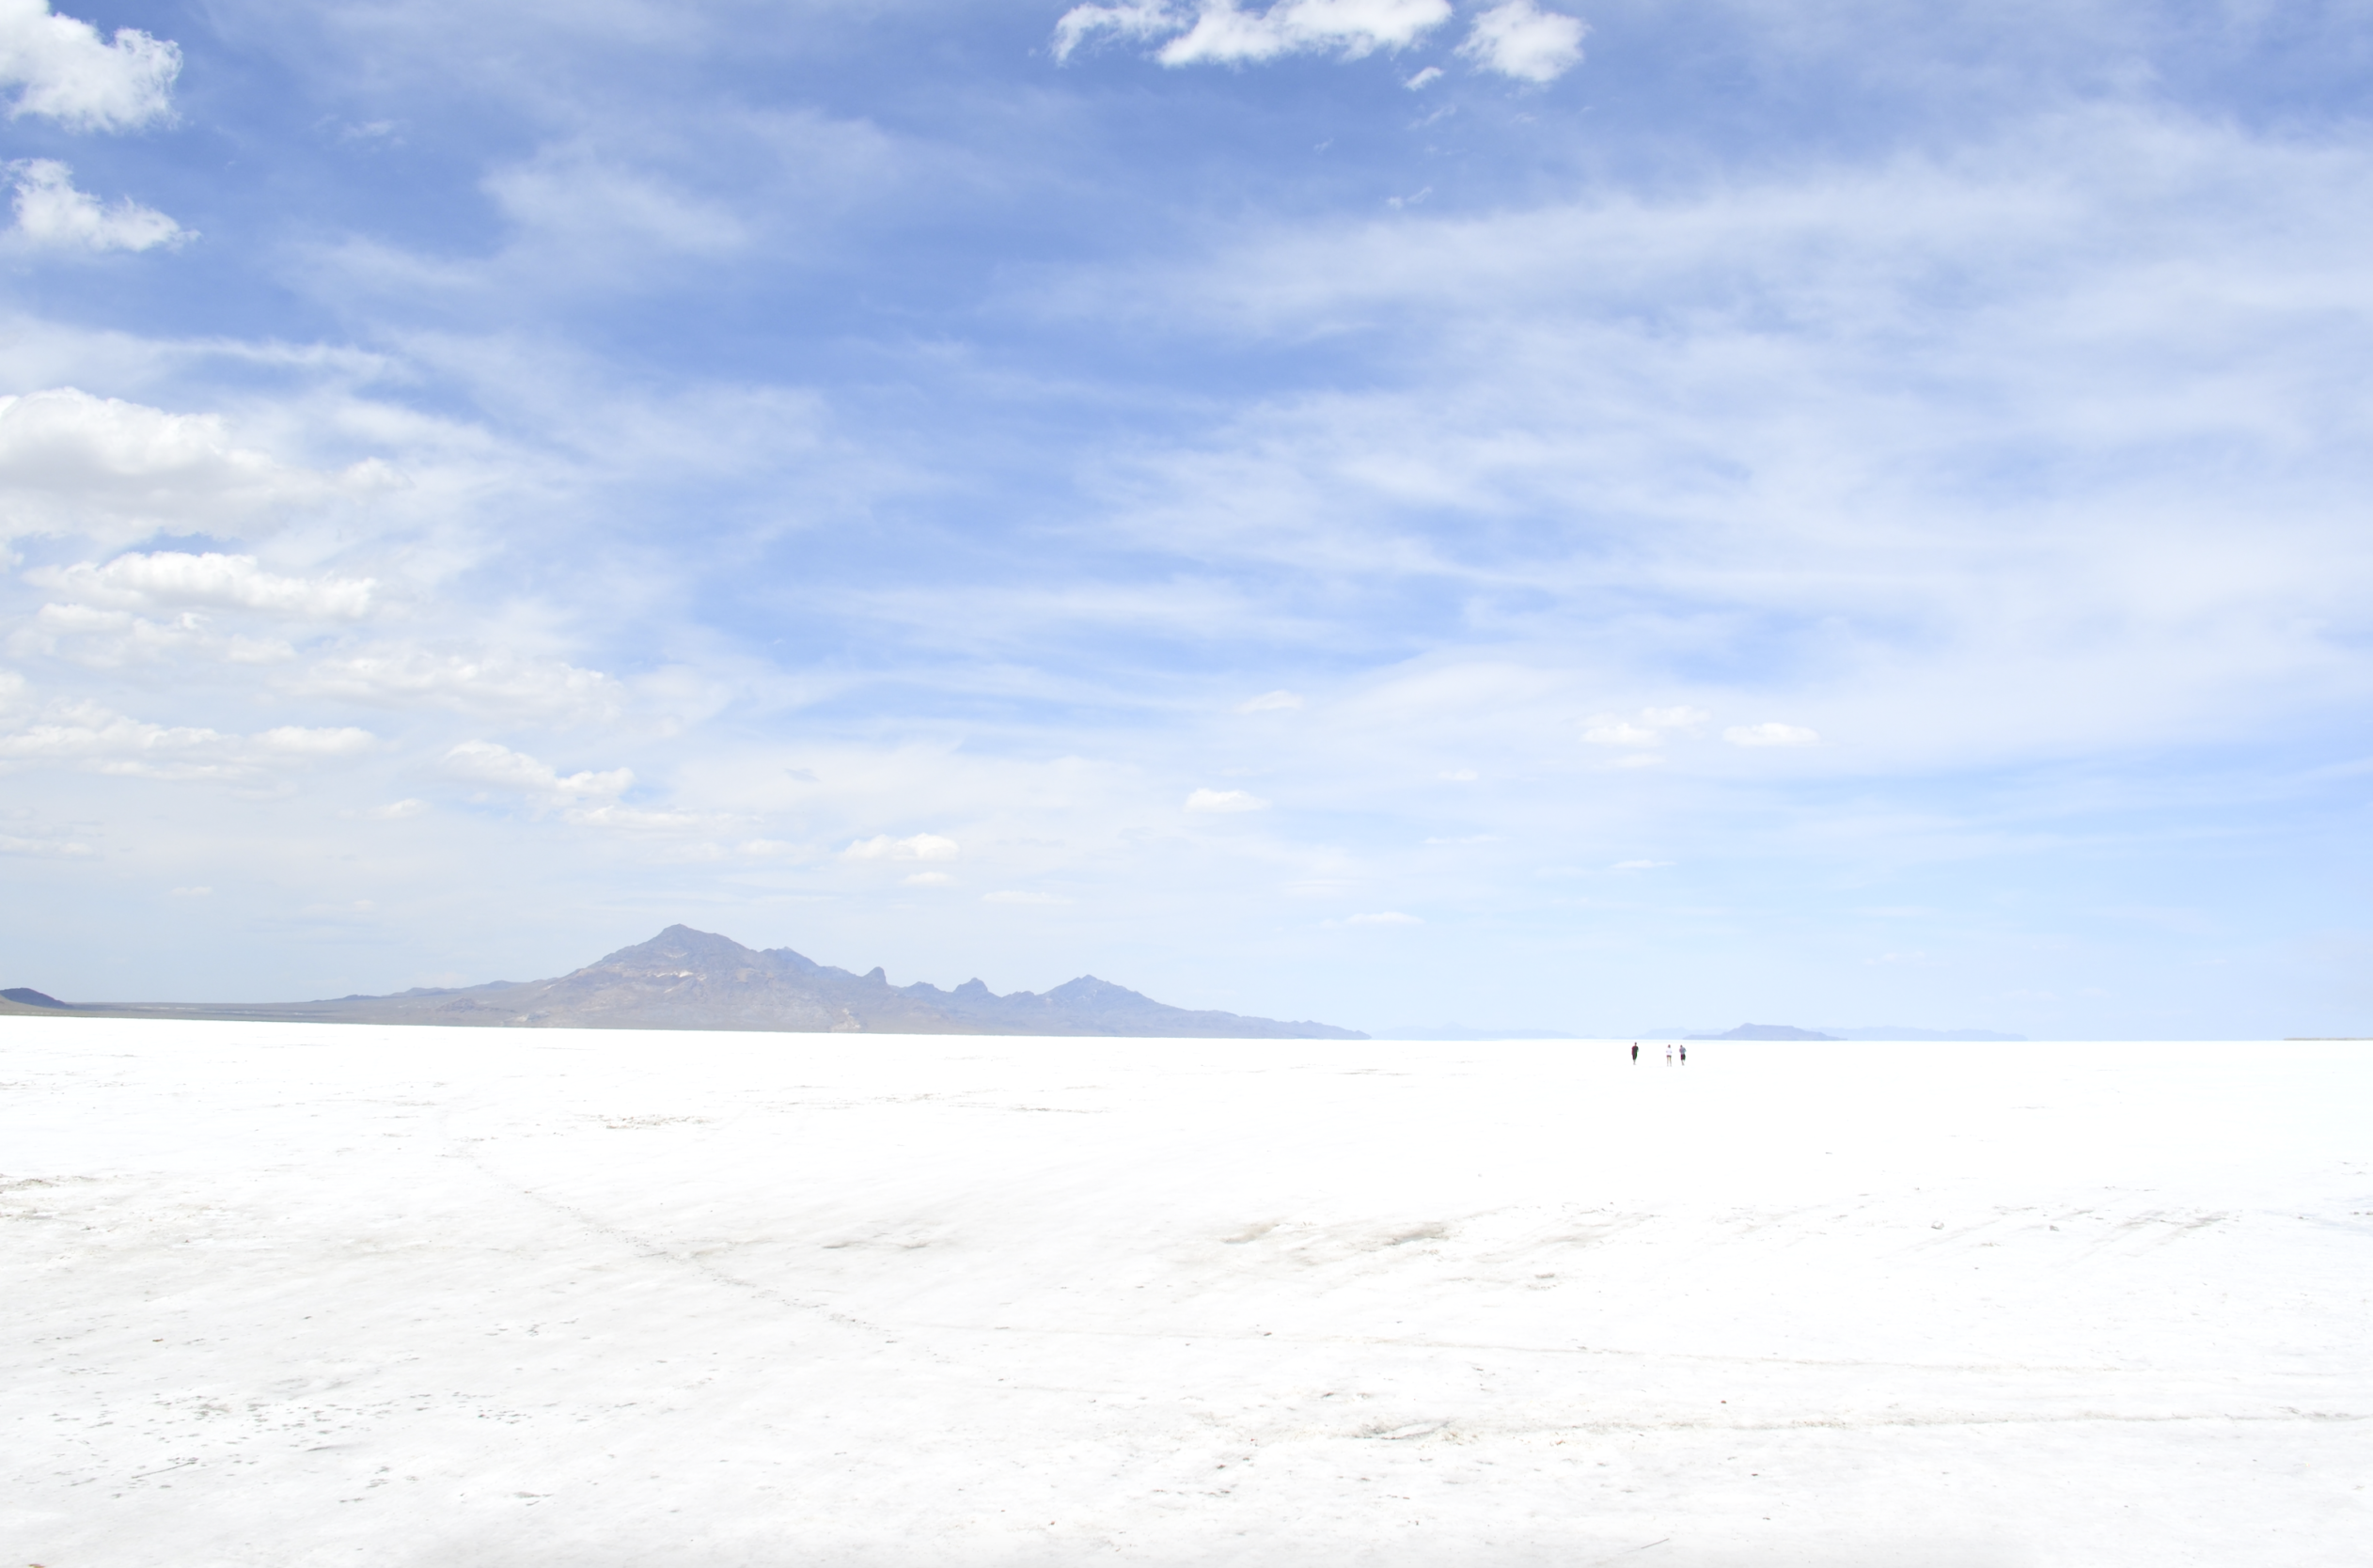 Bonneville Salt Flats Utah